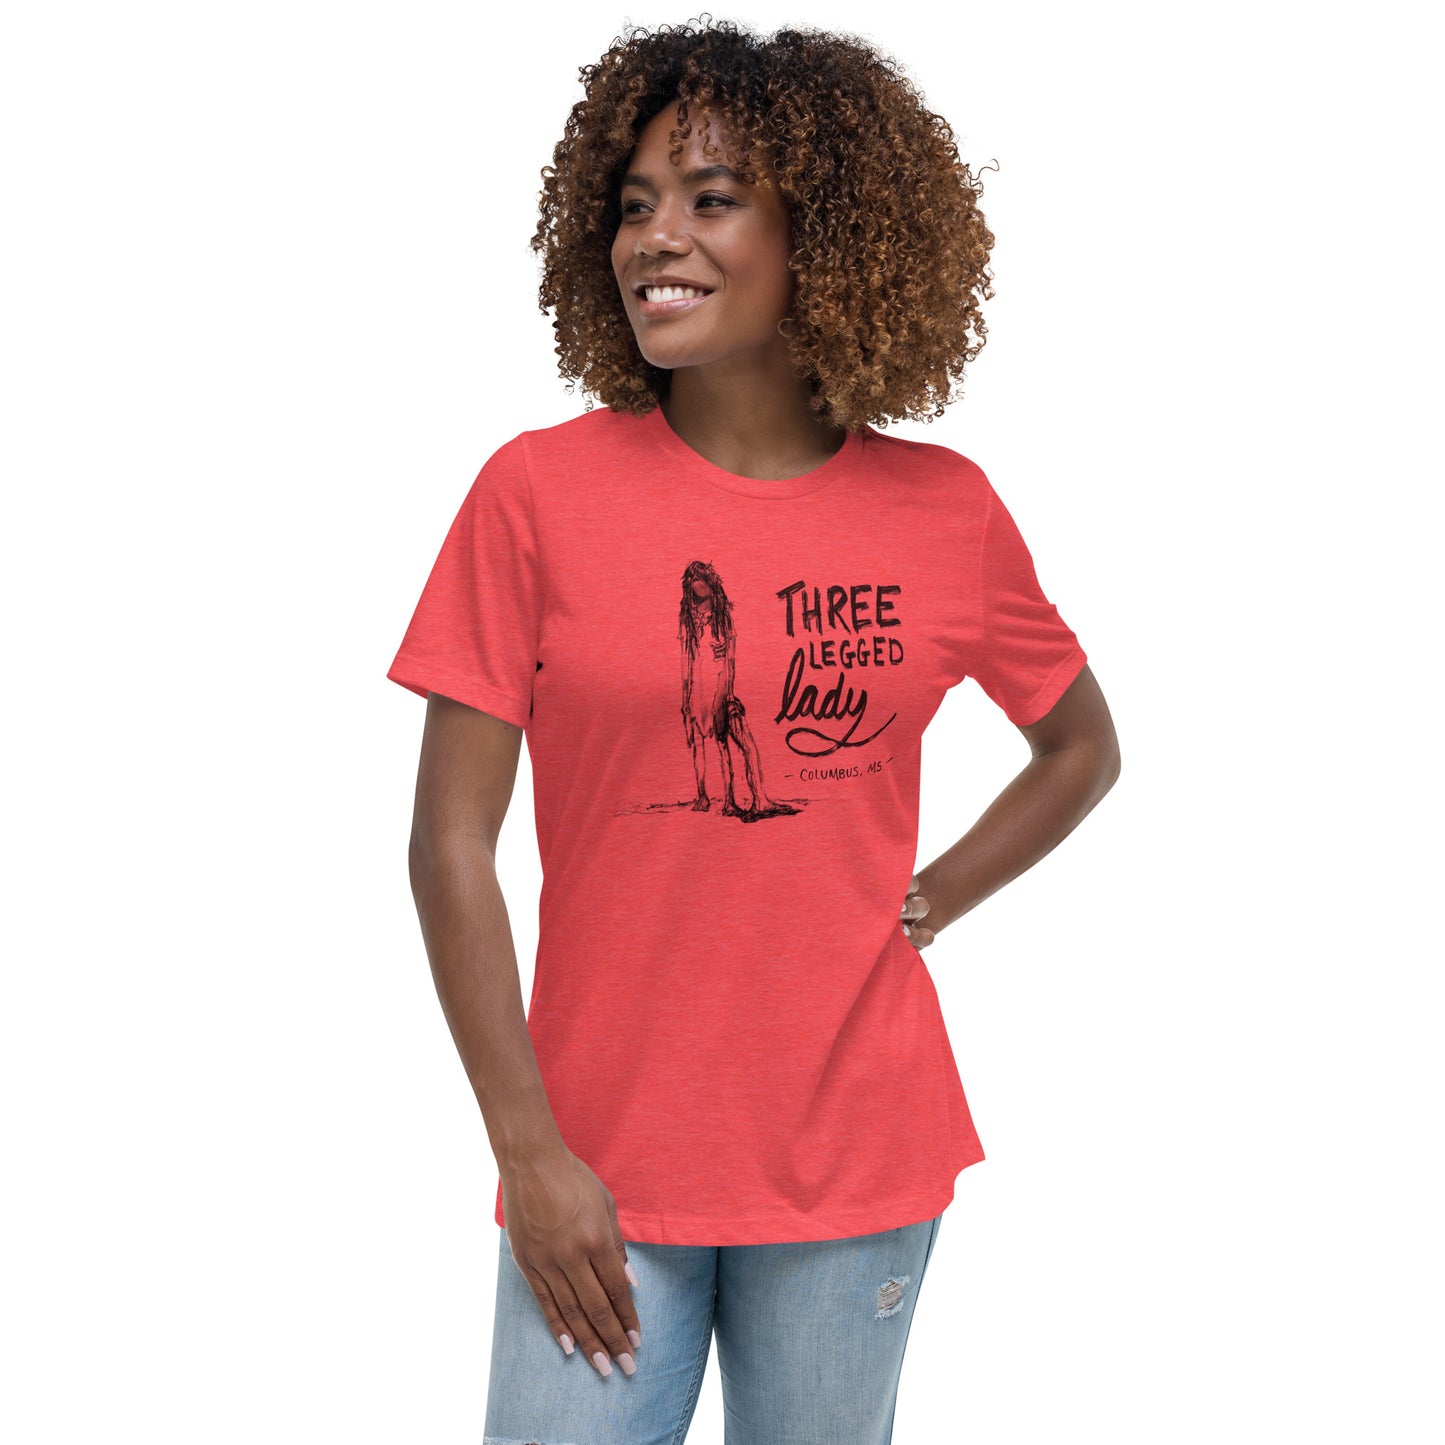 The Legend of Three-legged Lady Women's T-Shirt